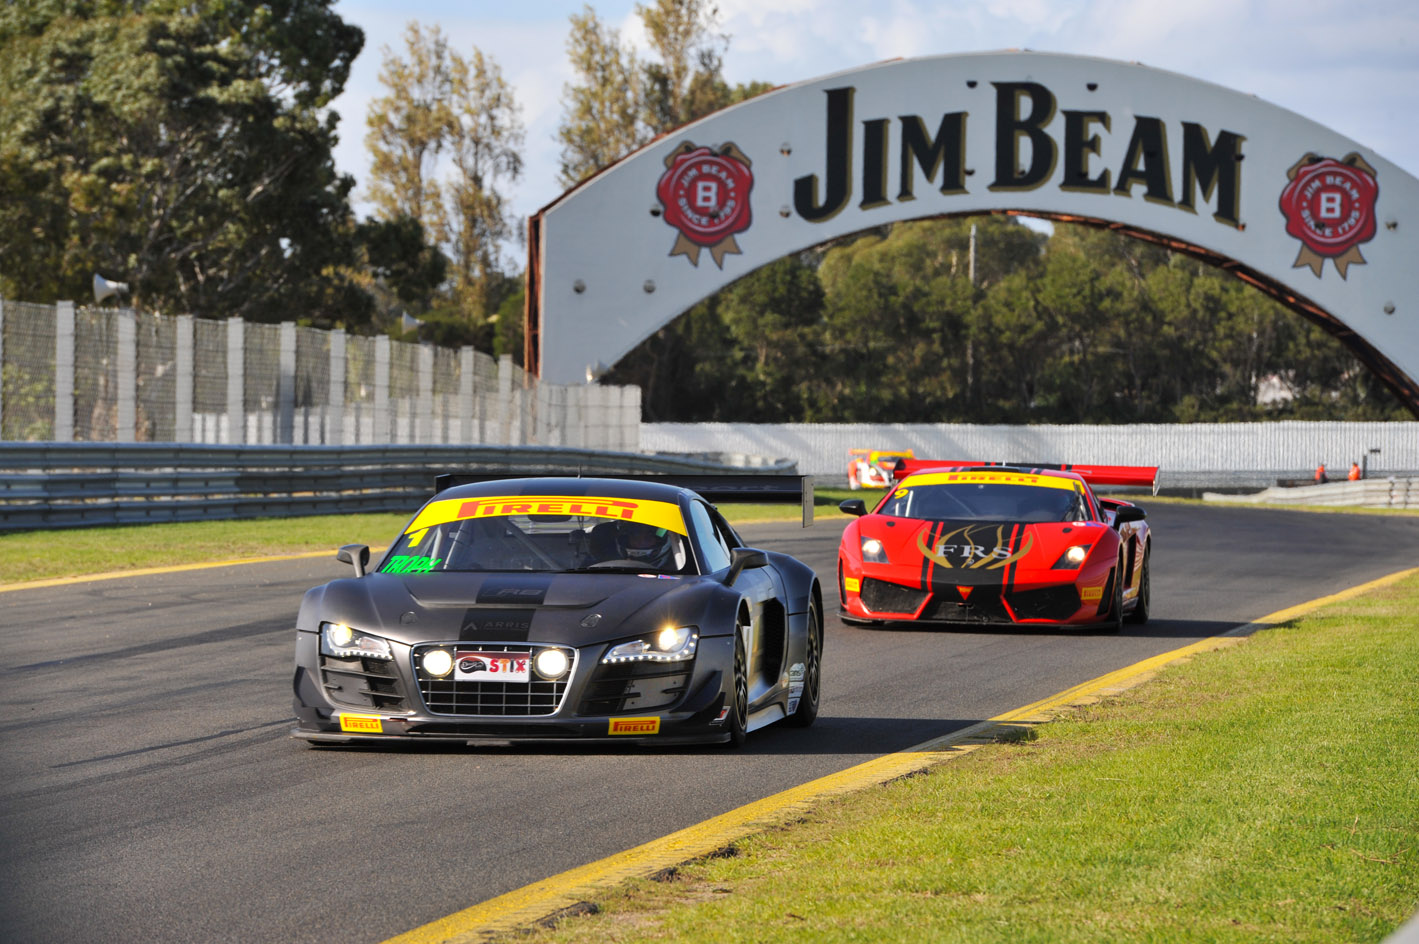 CAMS Australian GT Trophy Series presented by Pirelli opener declared ‘complete success’